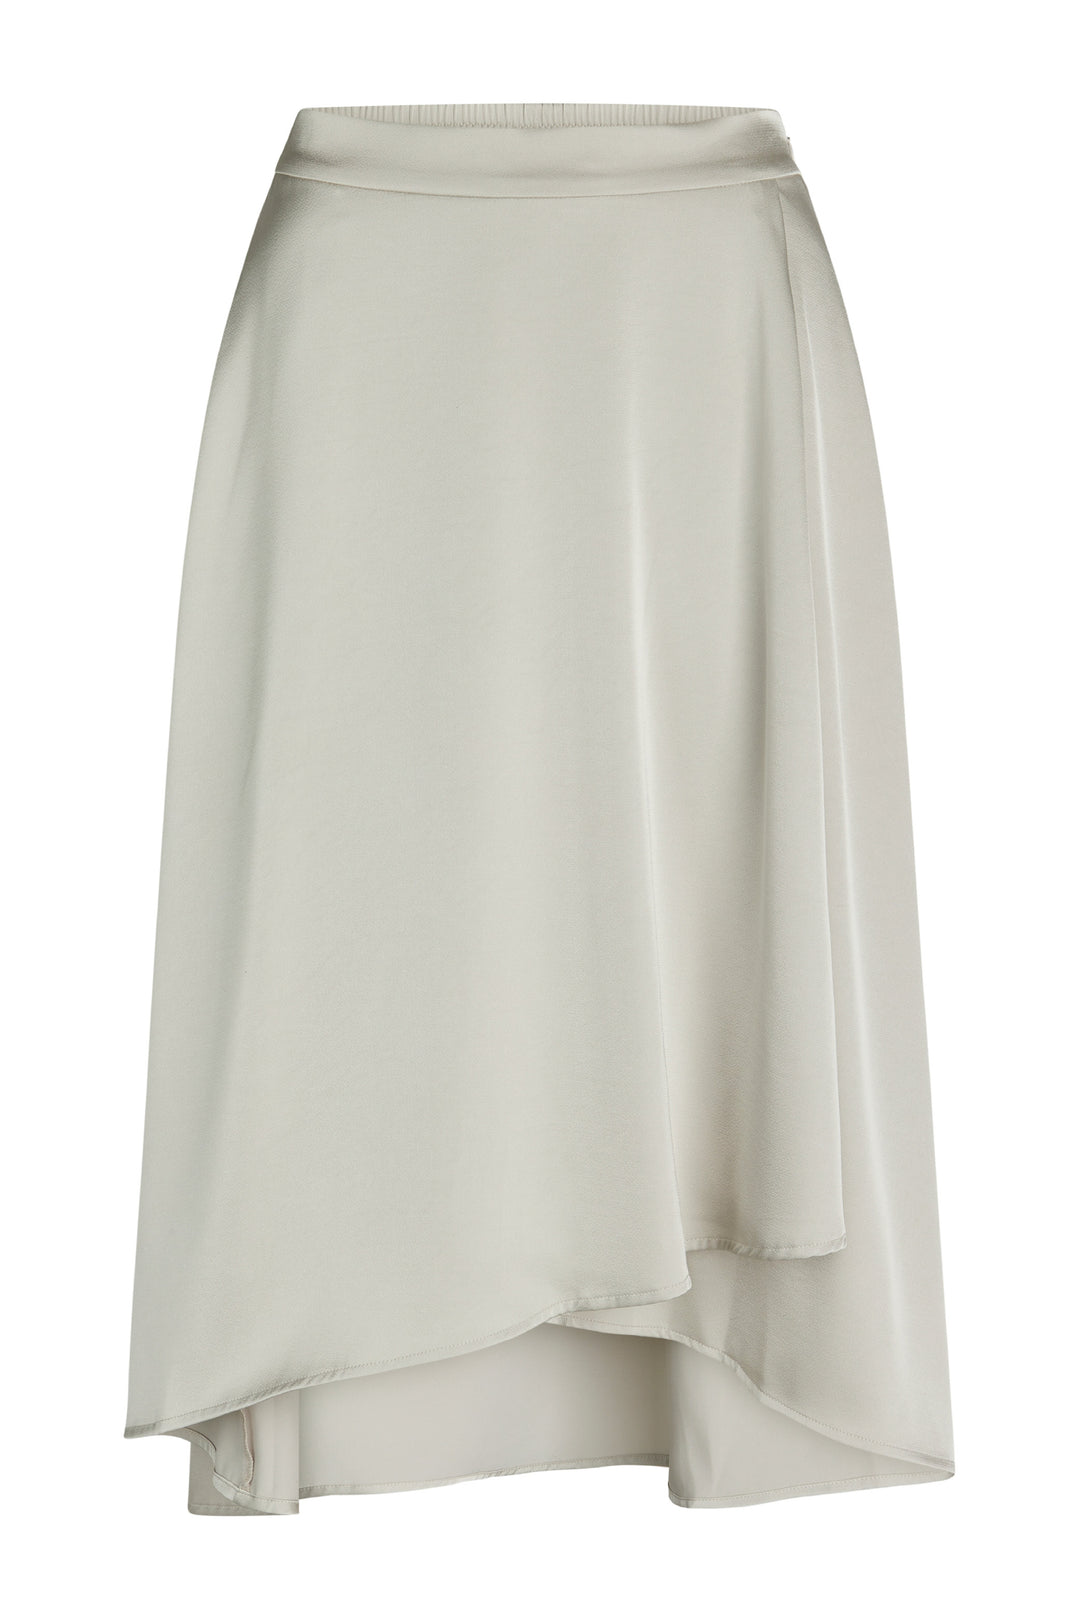 Bruuns Bazaar Women RaisellasBBEnya skirt Skirt Light Grey